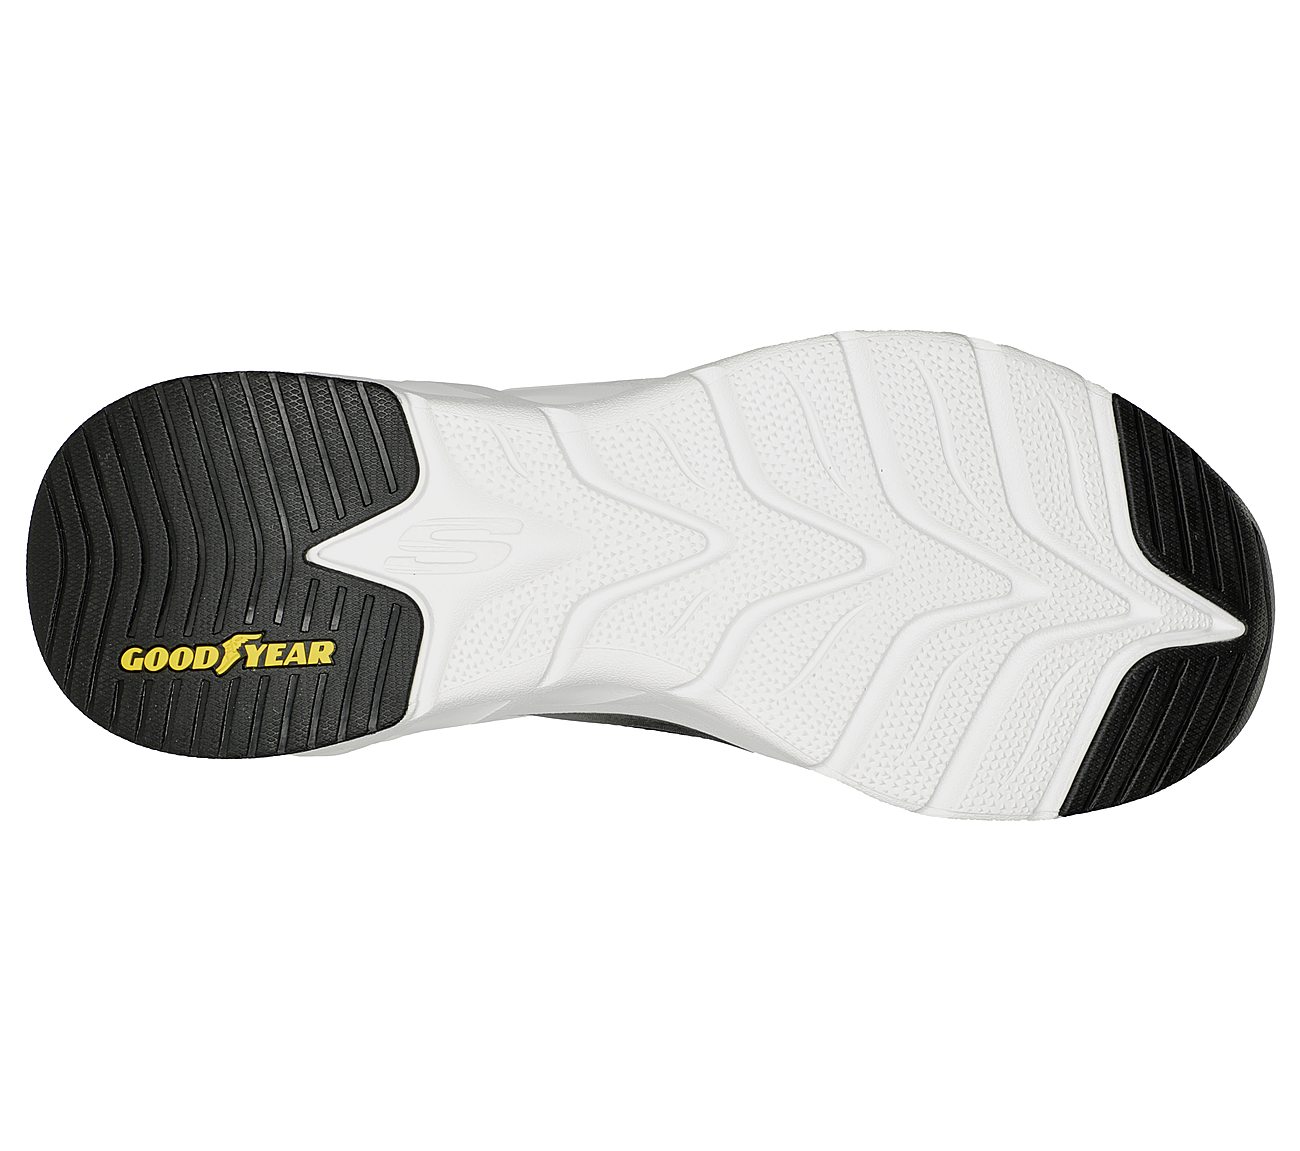 ARCH FIT GLIDE-STEP - NODE, BLACK/WHITE Footwear Bottom View